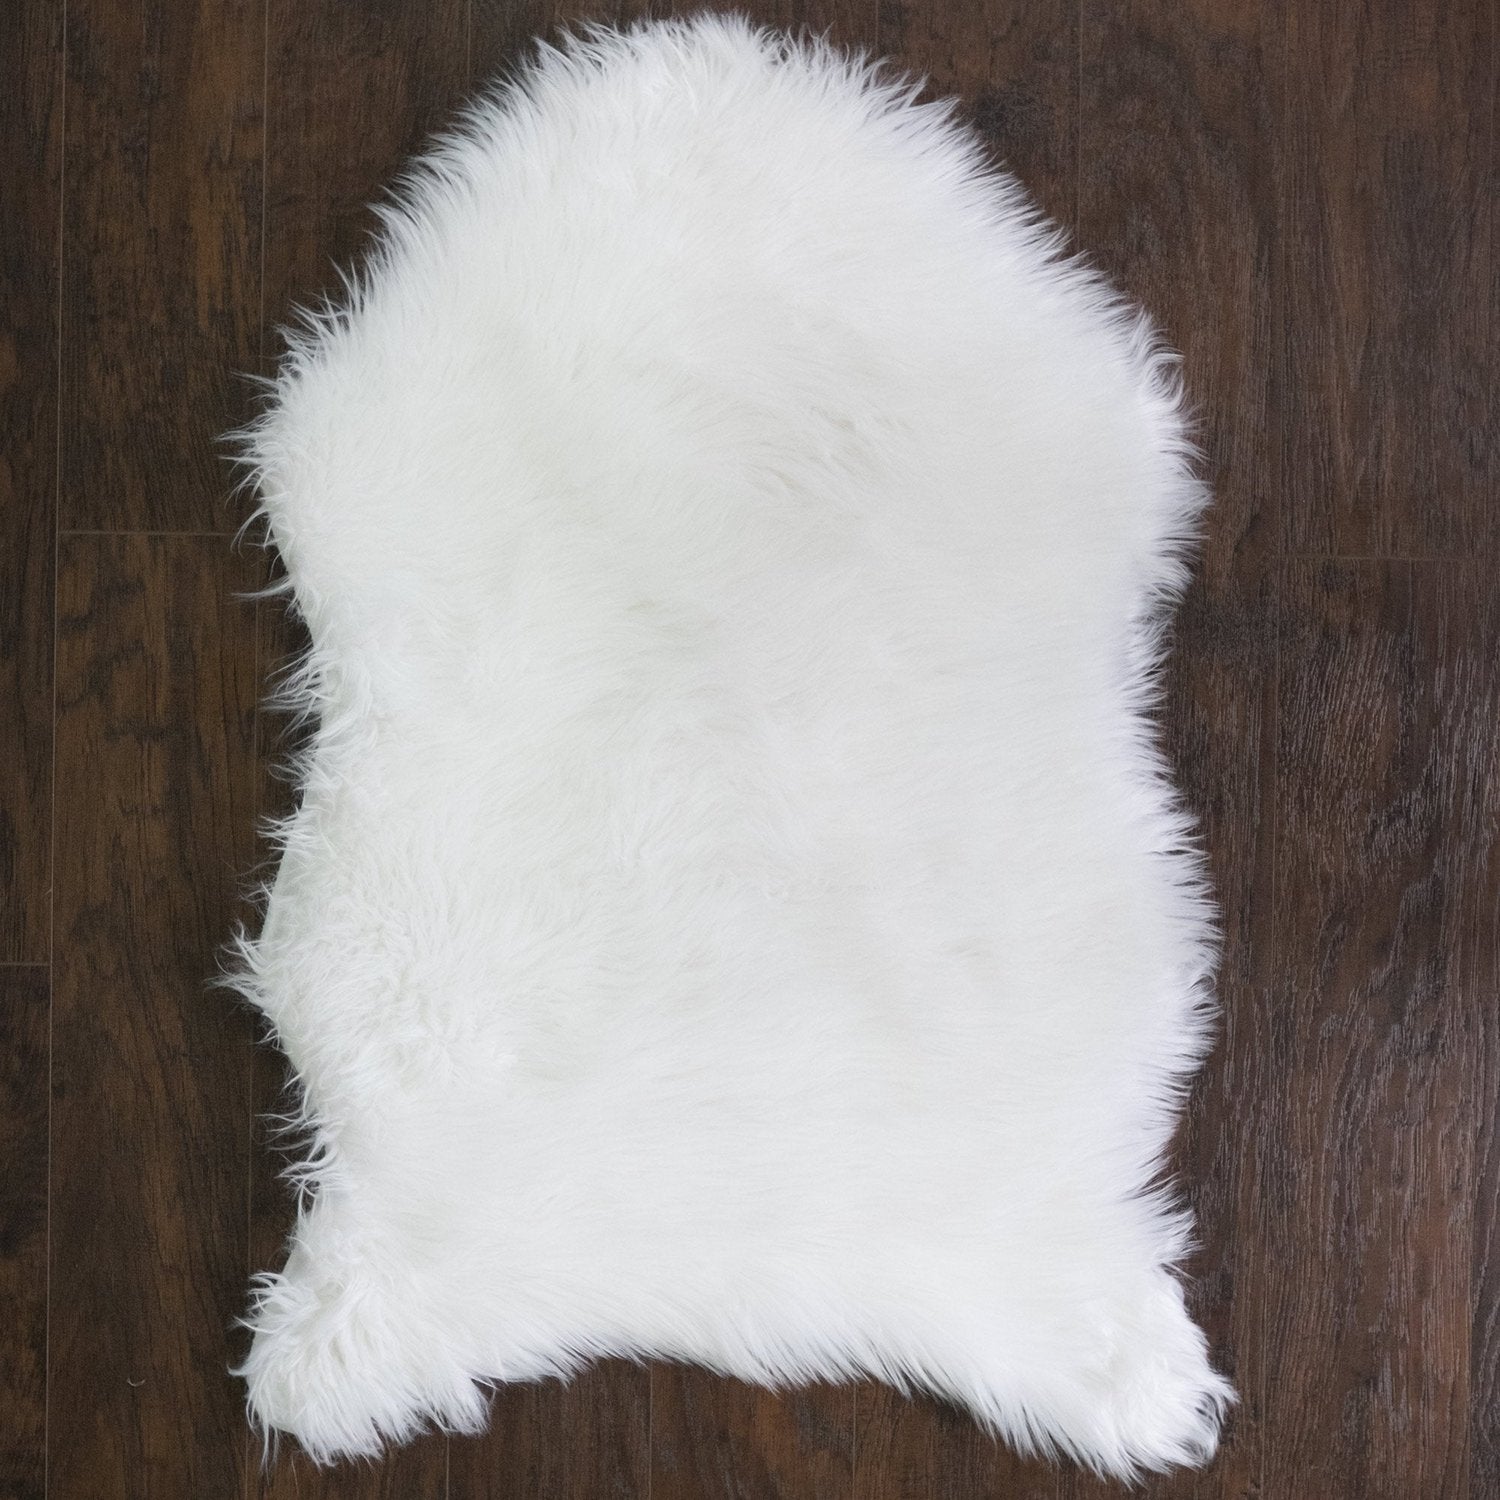 Fluffy Faux Sheepskin Fur Rug White - Top